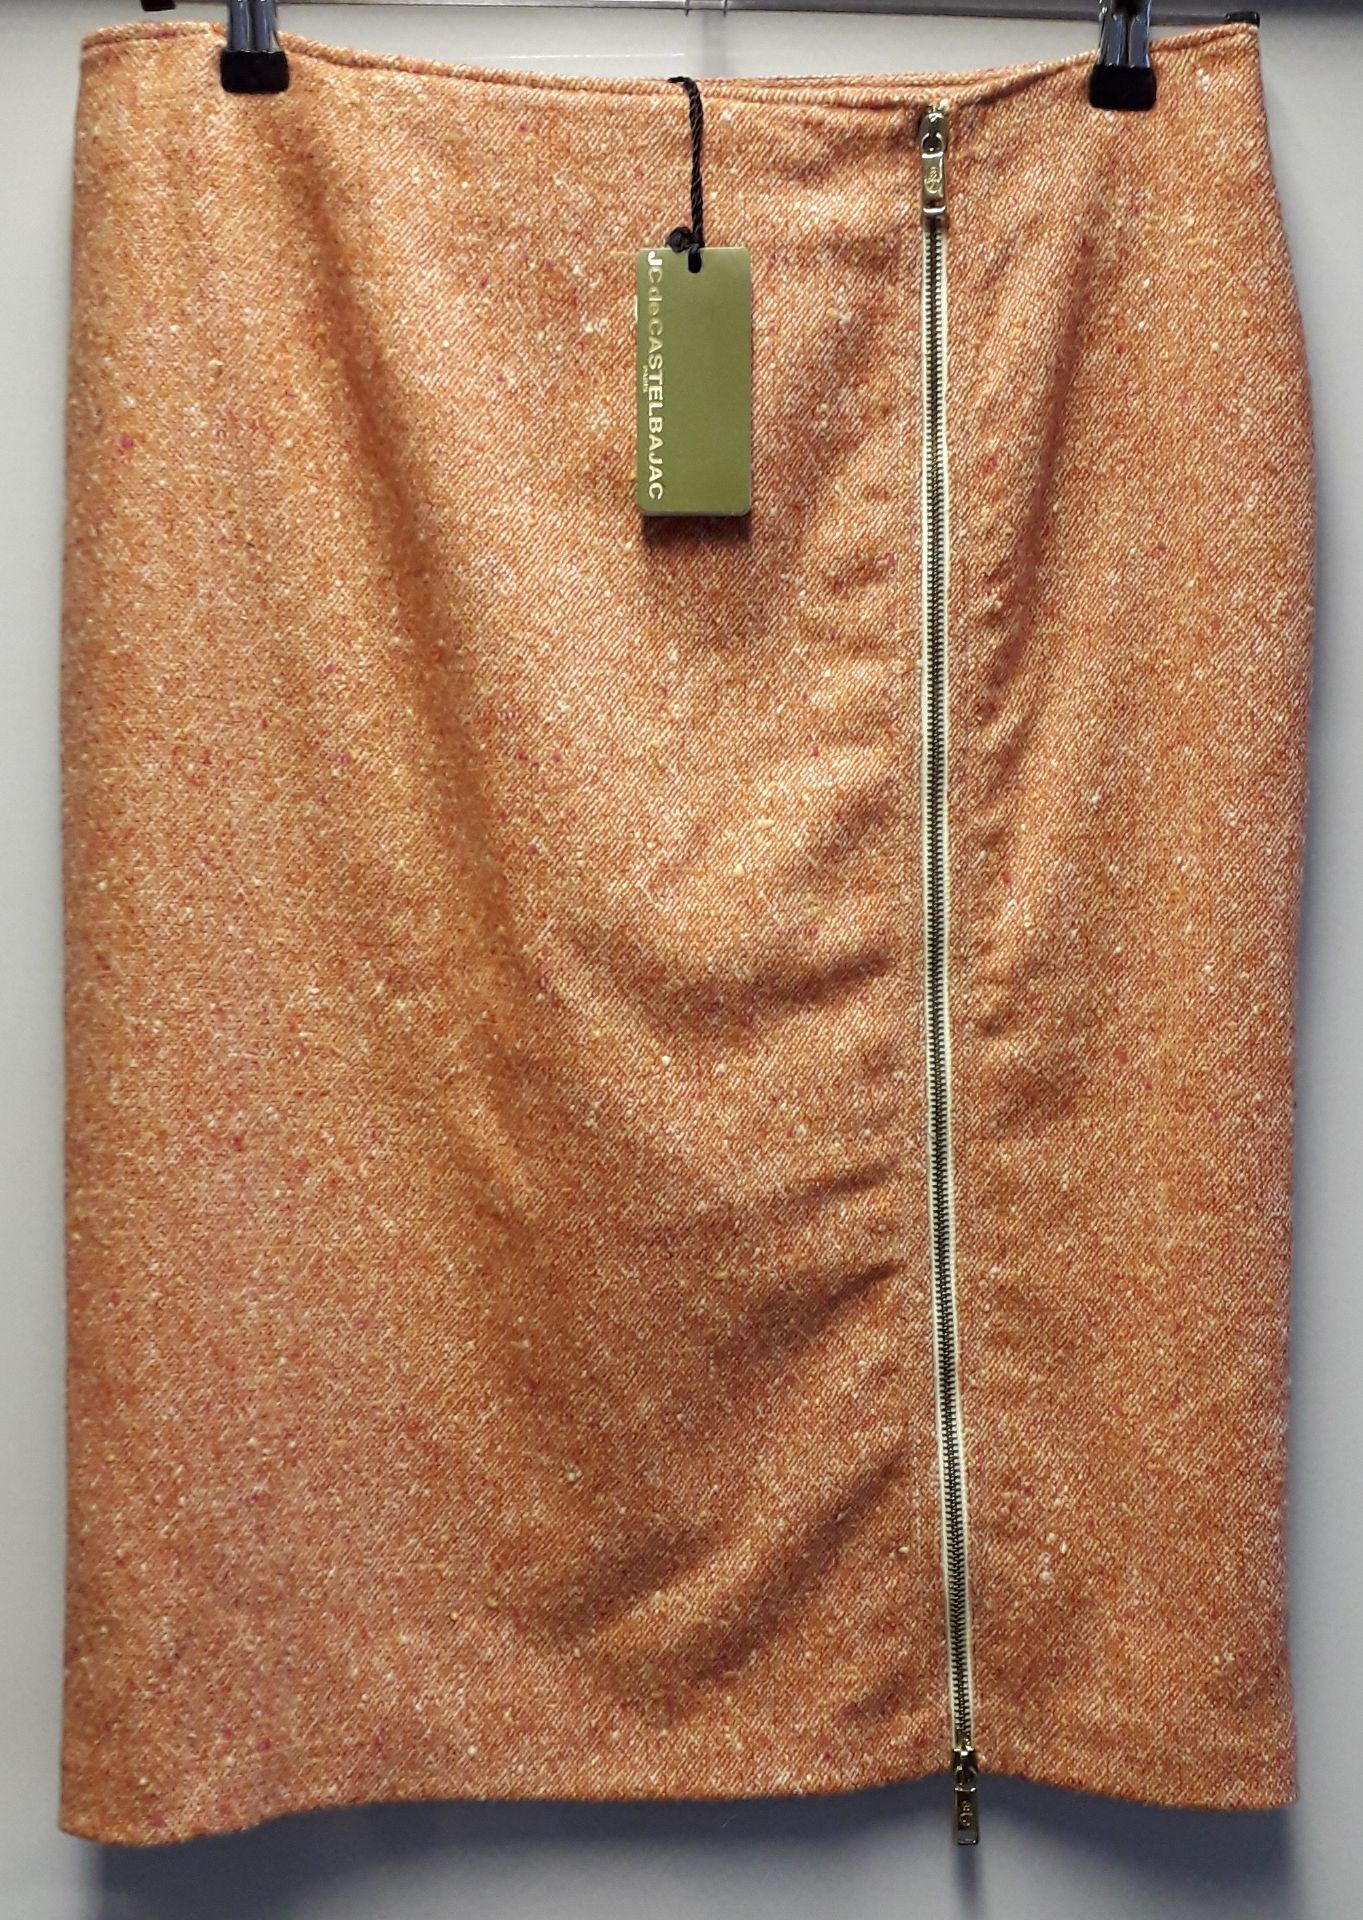 1 x Jc De Castlebajac Paris Tangerine Zipped Pencil Skirt - Size: 46 - Material: Lining 68% Acetate,